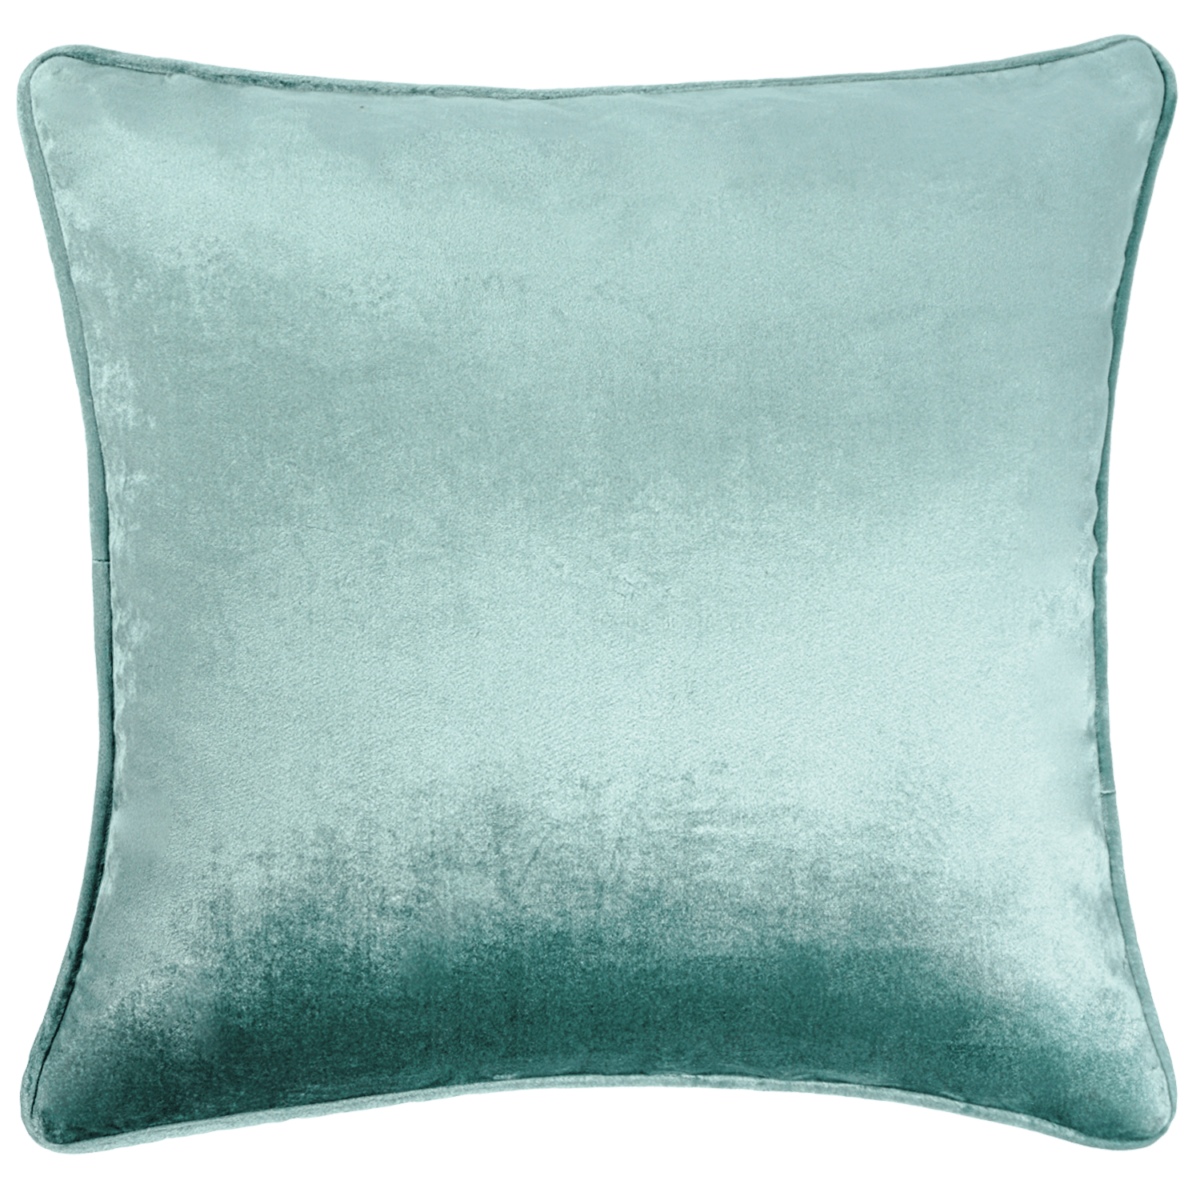 Aqua plain velvet cushion throw covers